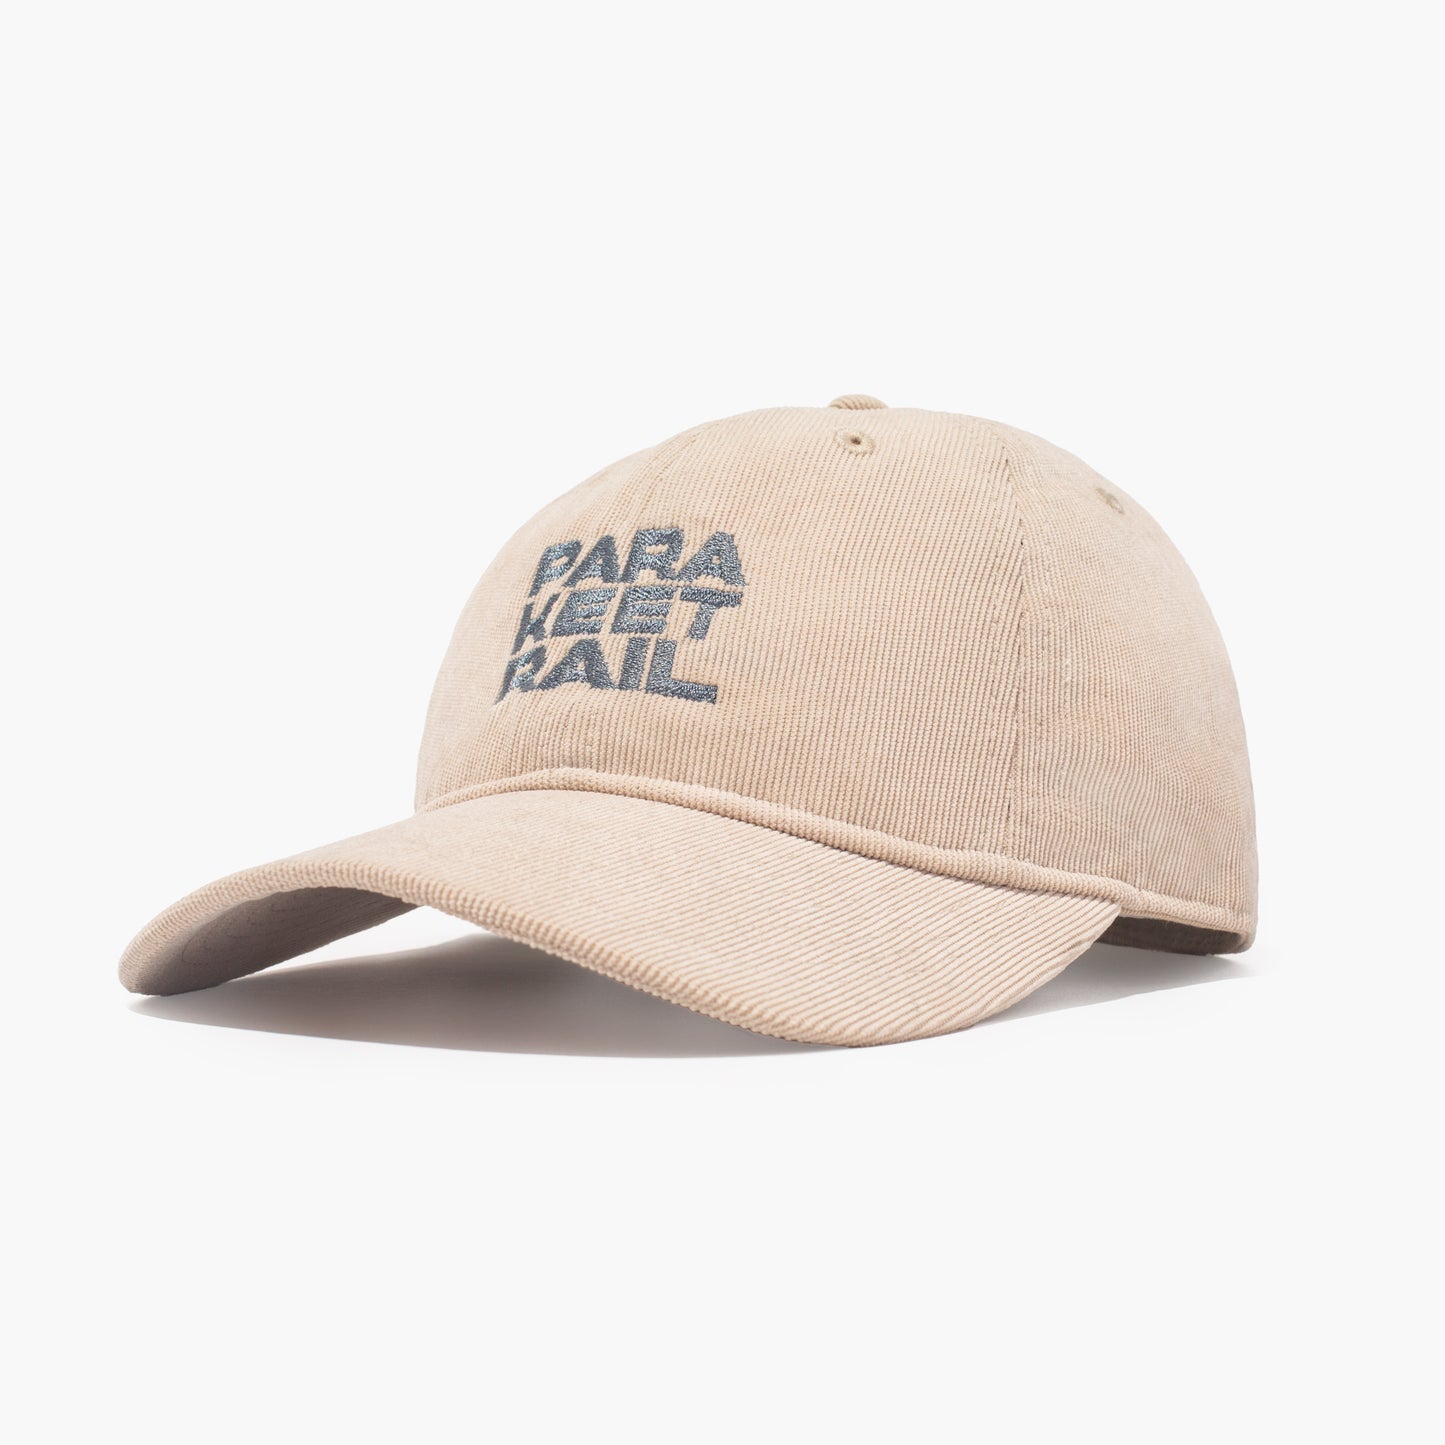 PRKT - Baseball Cap, Cream Χ Céleste